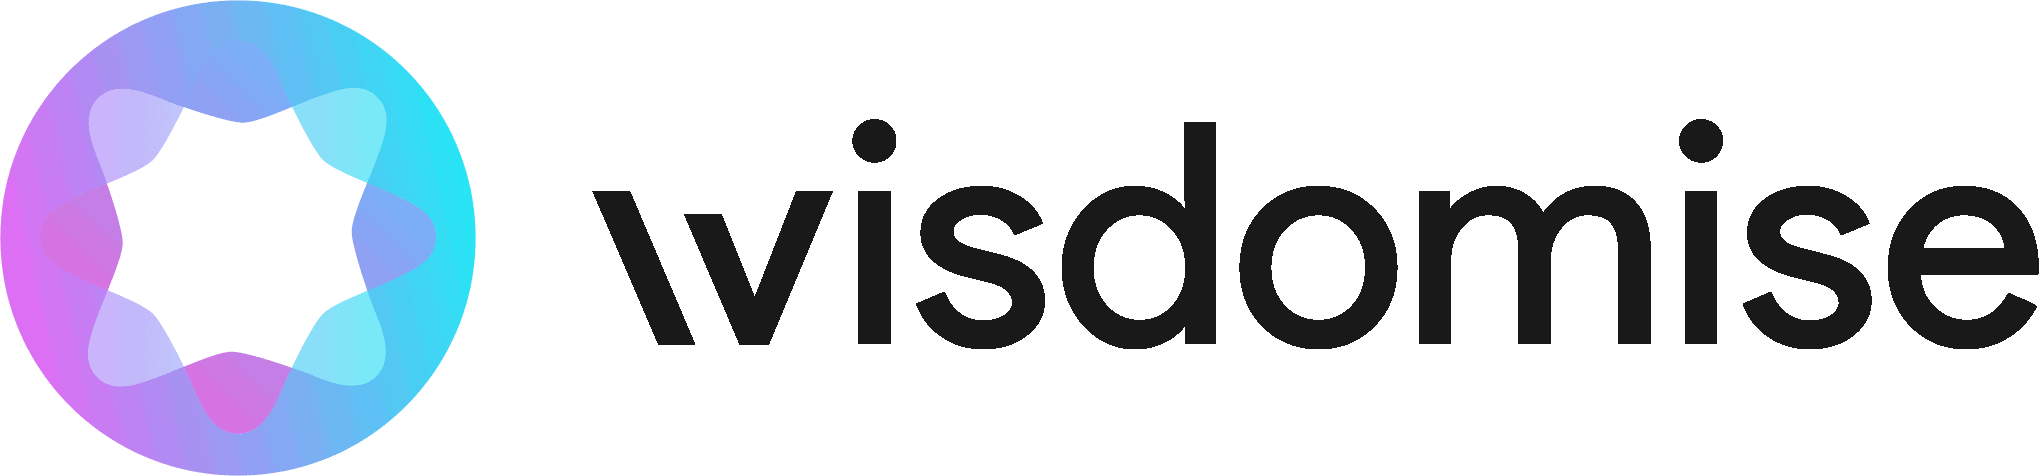 wisdomise-logo